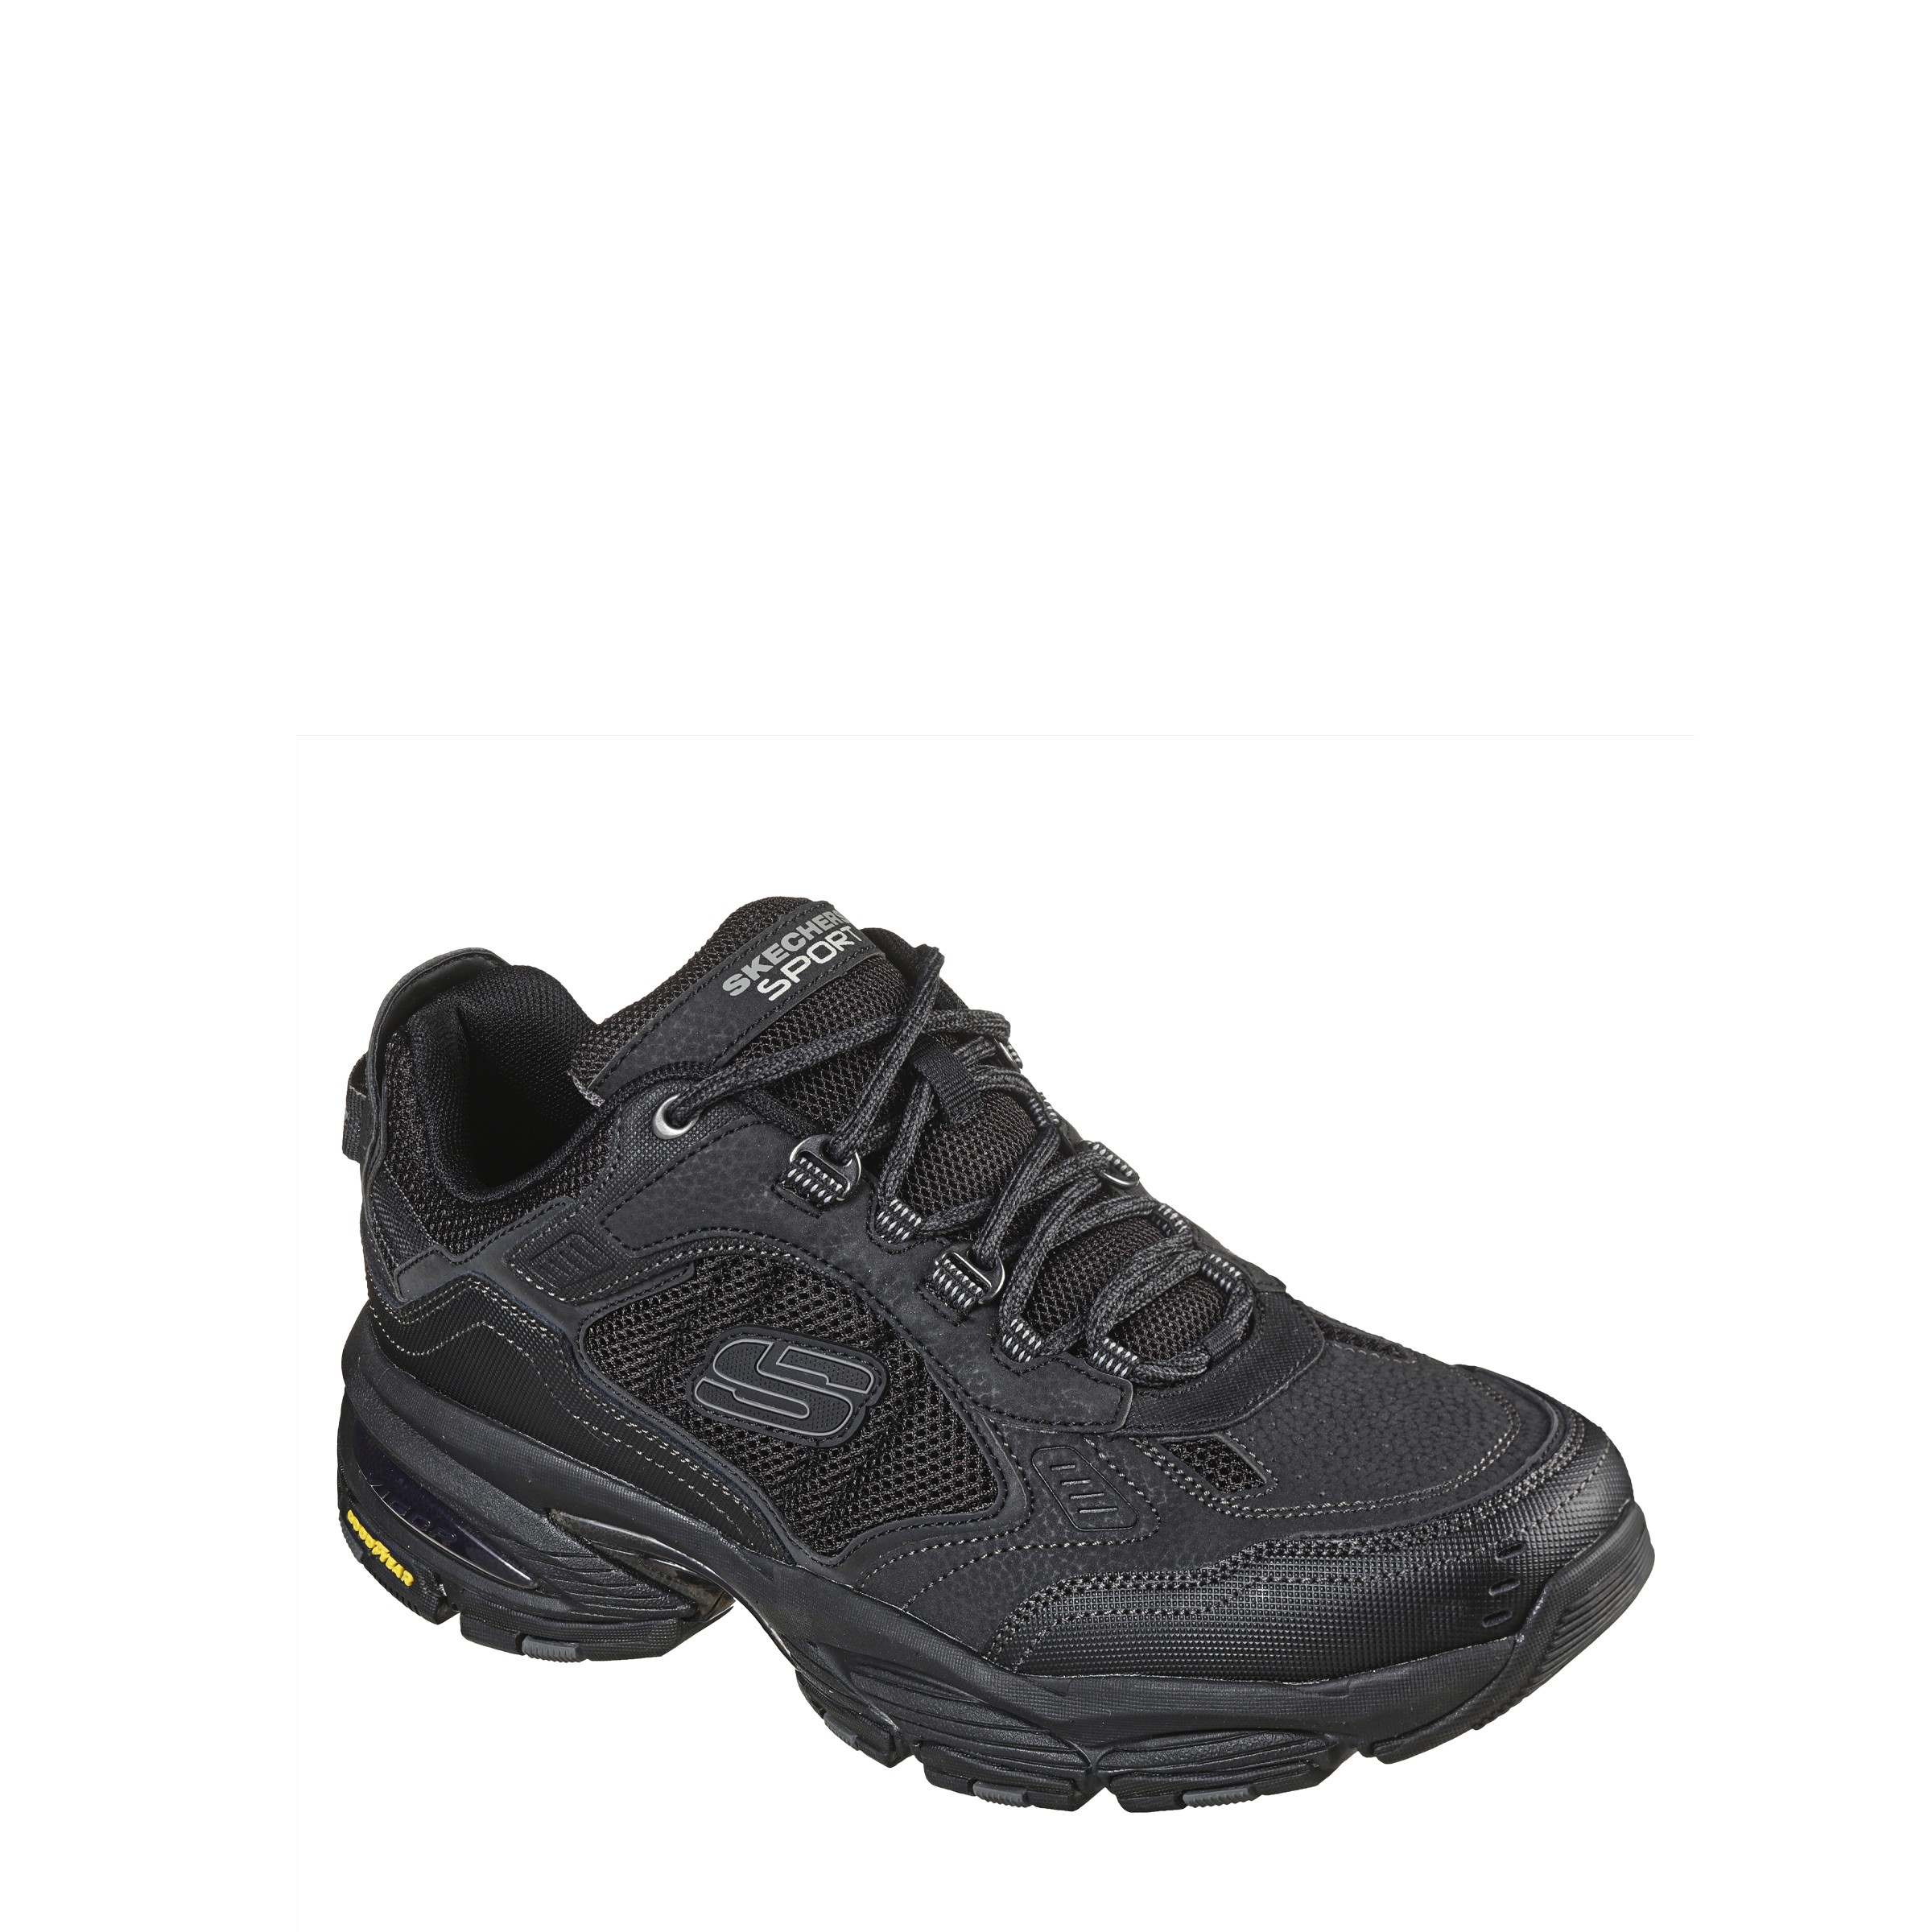 Men's Vigor 3 Wide Trail Shoe